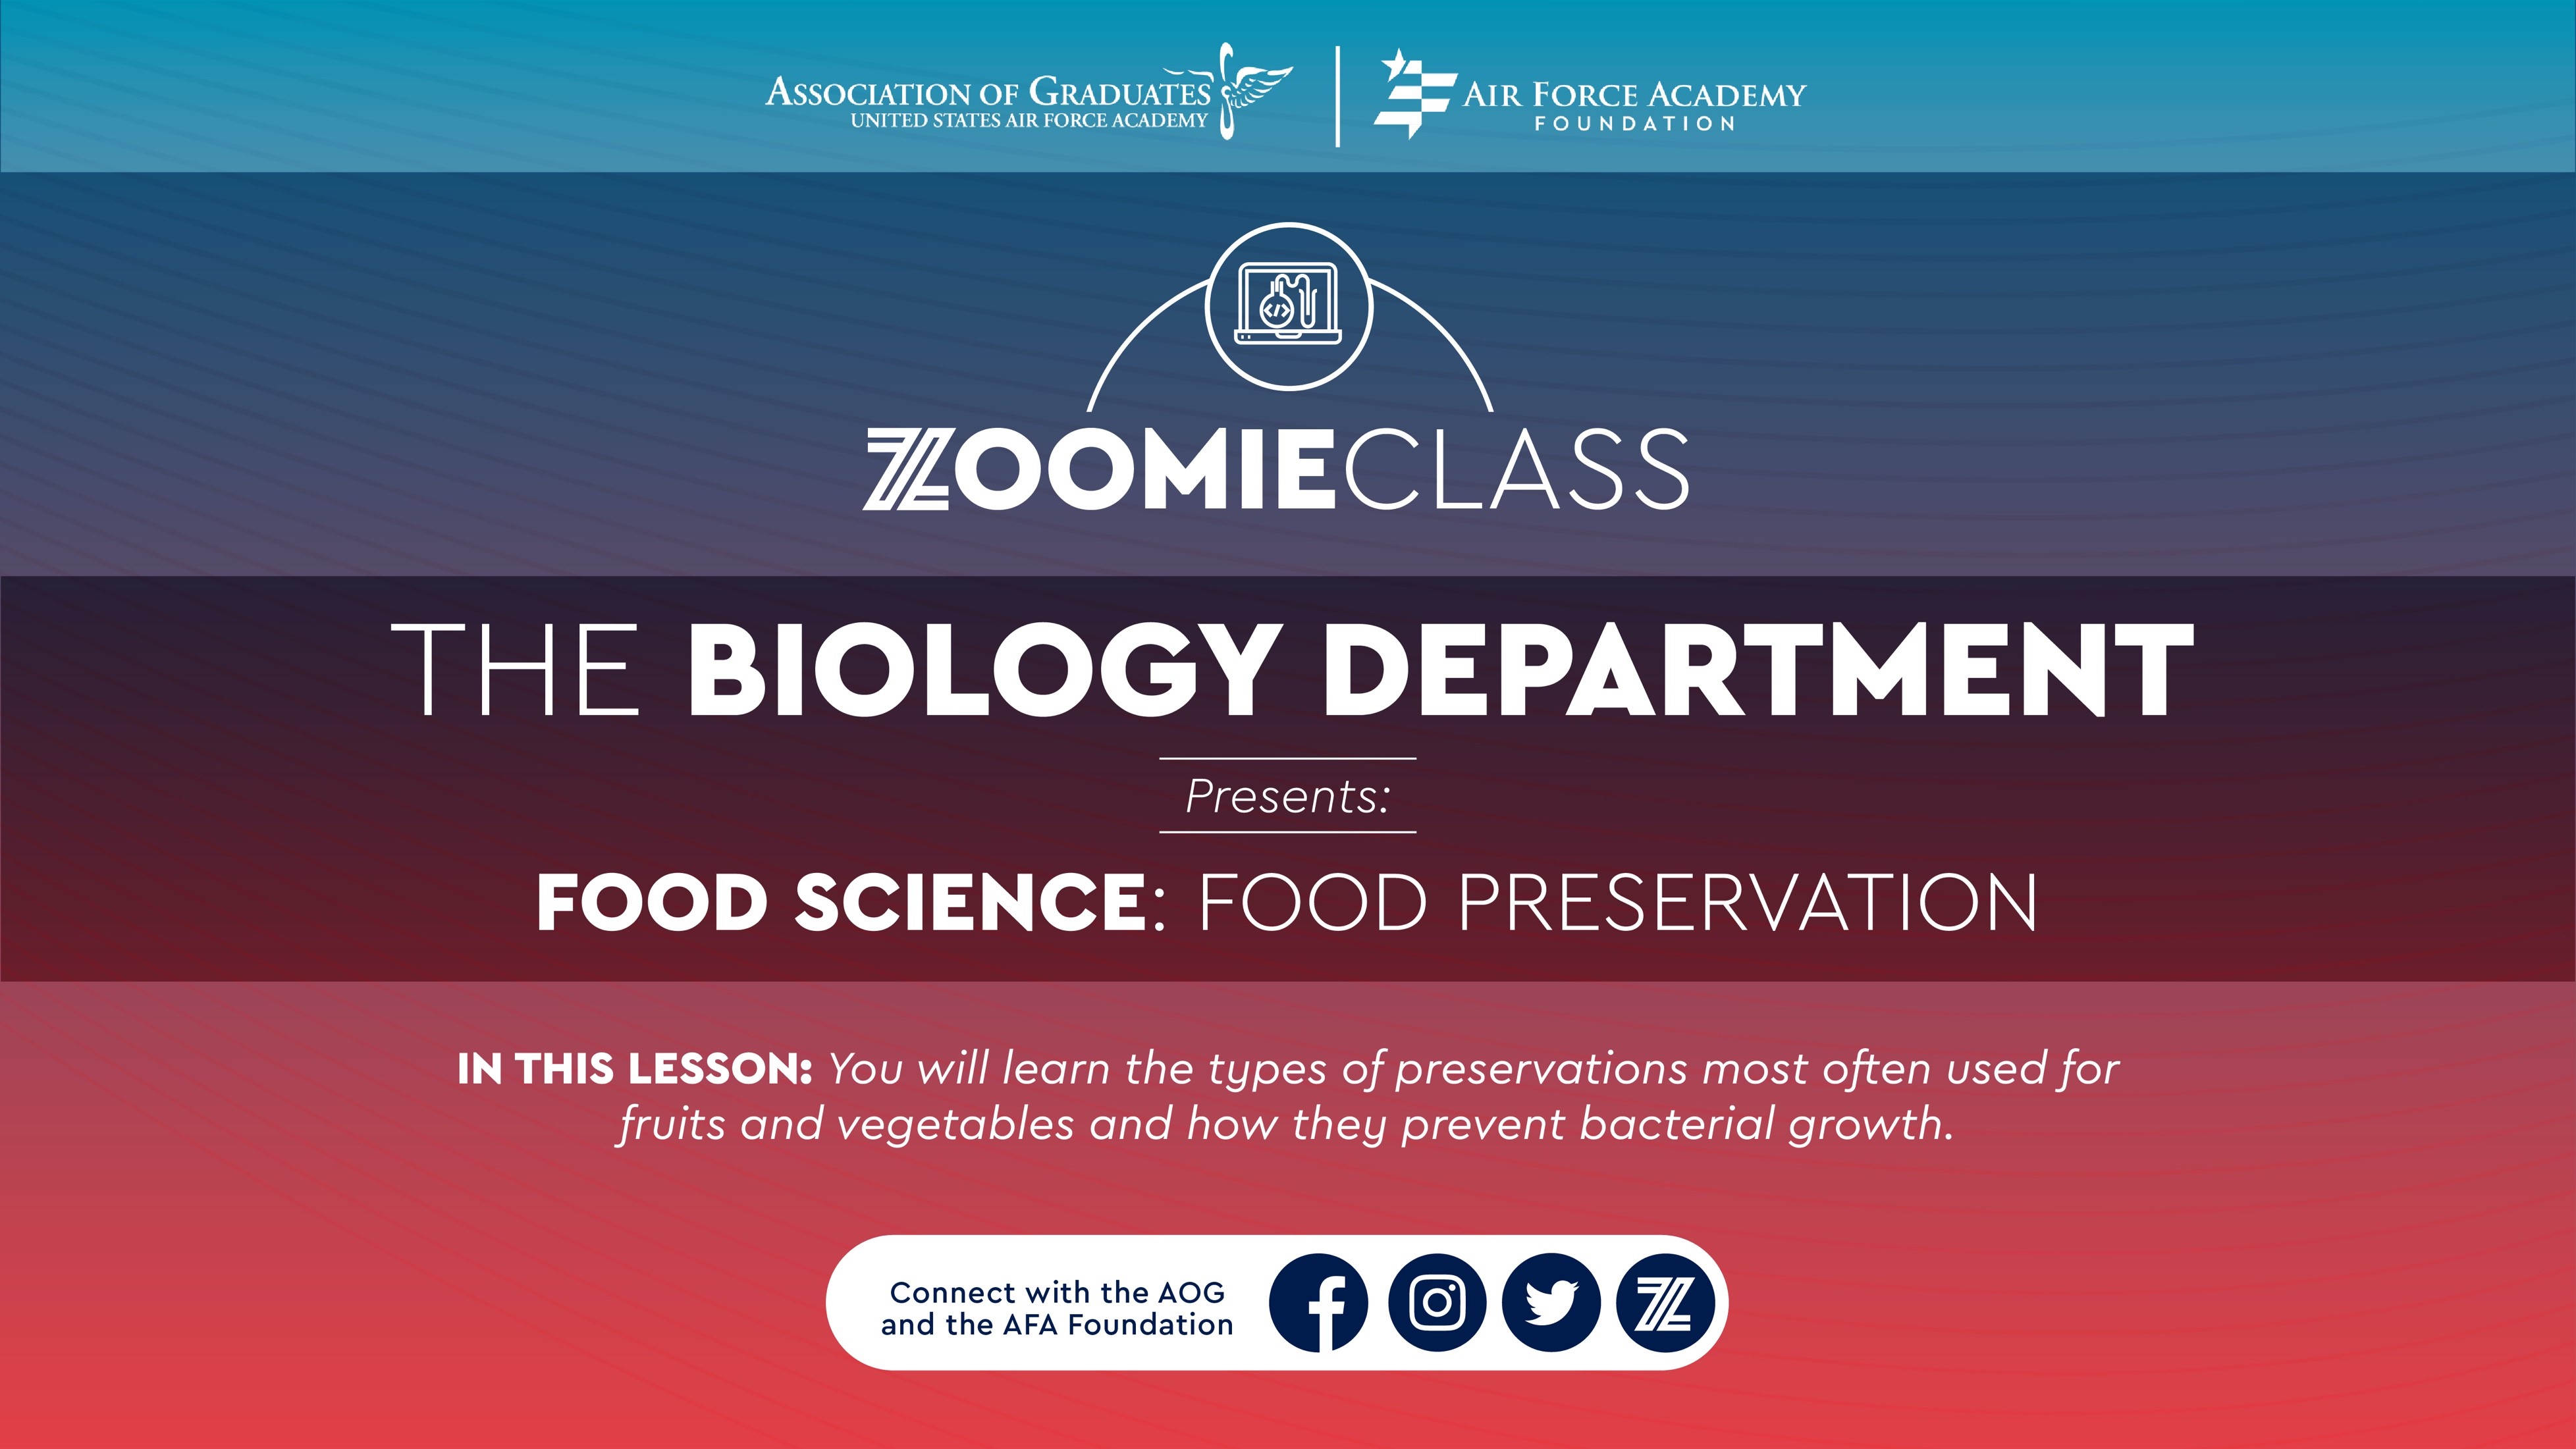 Image for ZoomieClass: USAFA Biology Dept, Food Science Class-Food Preservation webinar